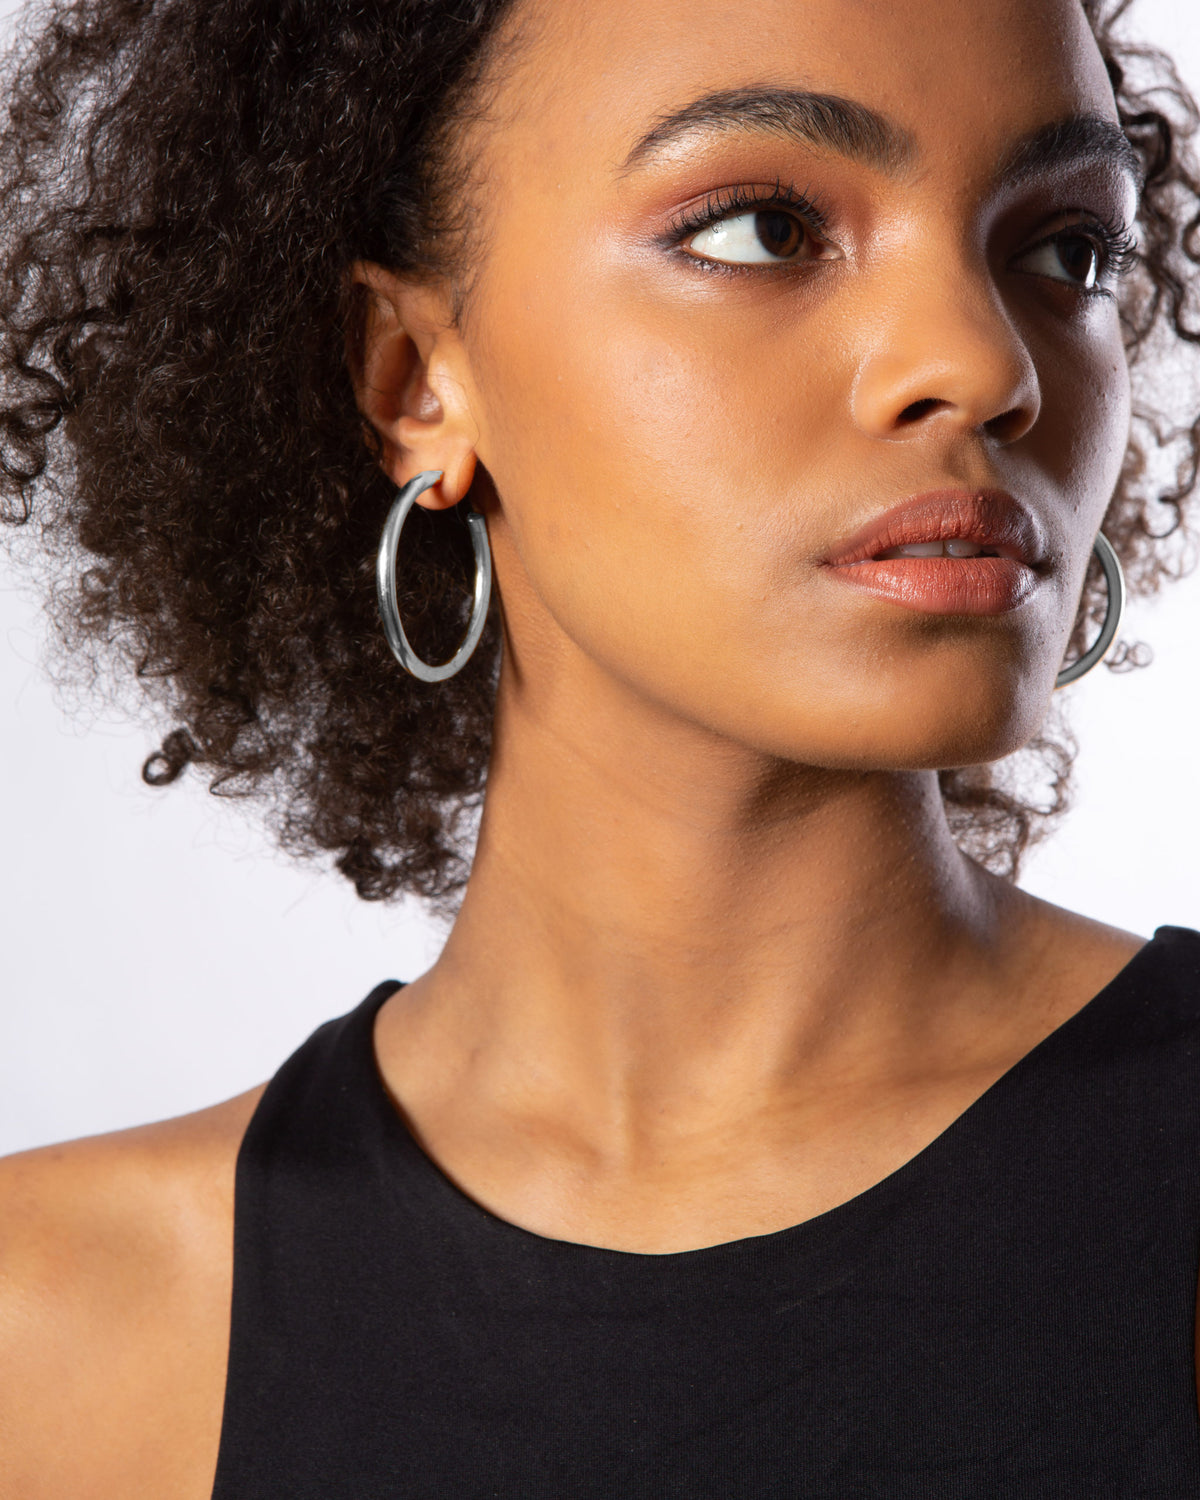 Buy Mid Size Simple Hoop Earrings Online - Accessorize India